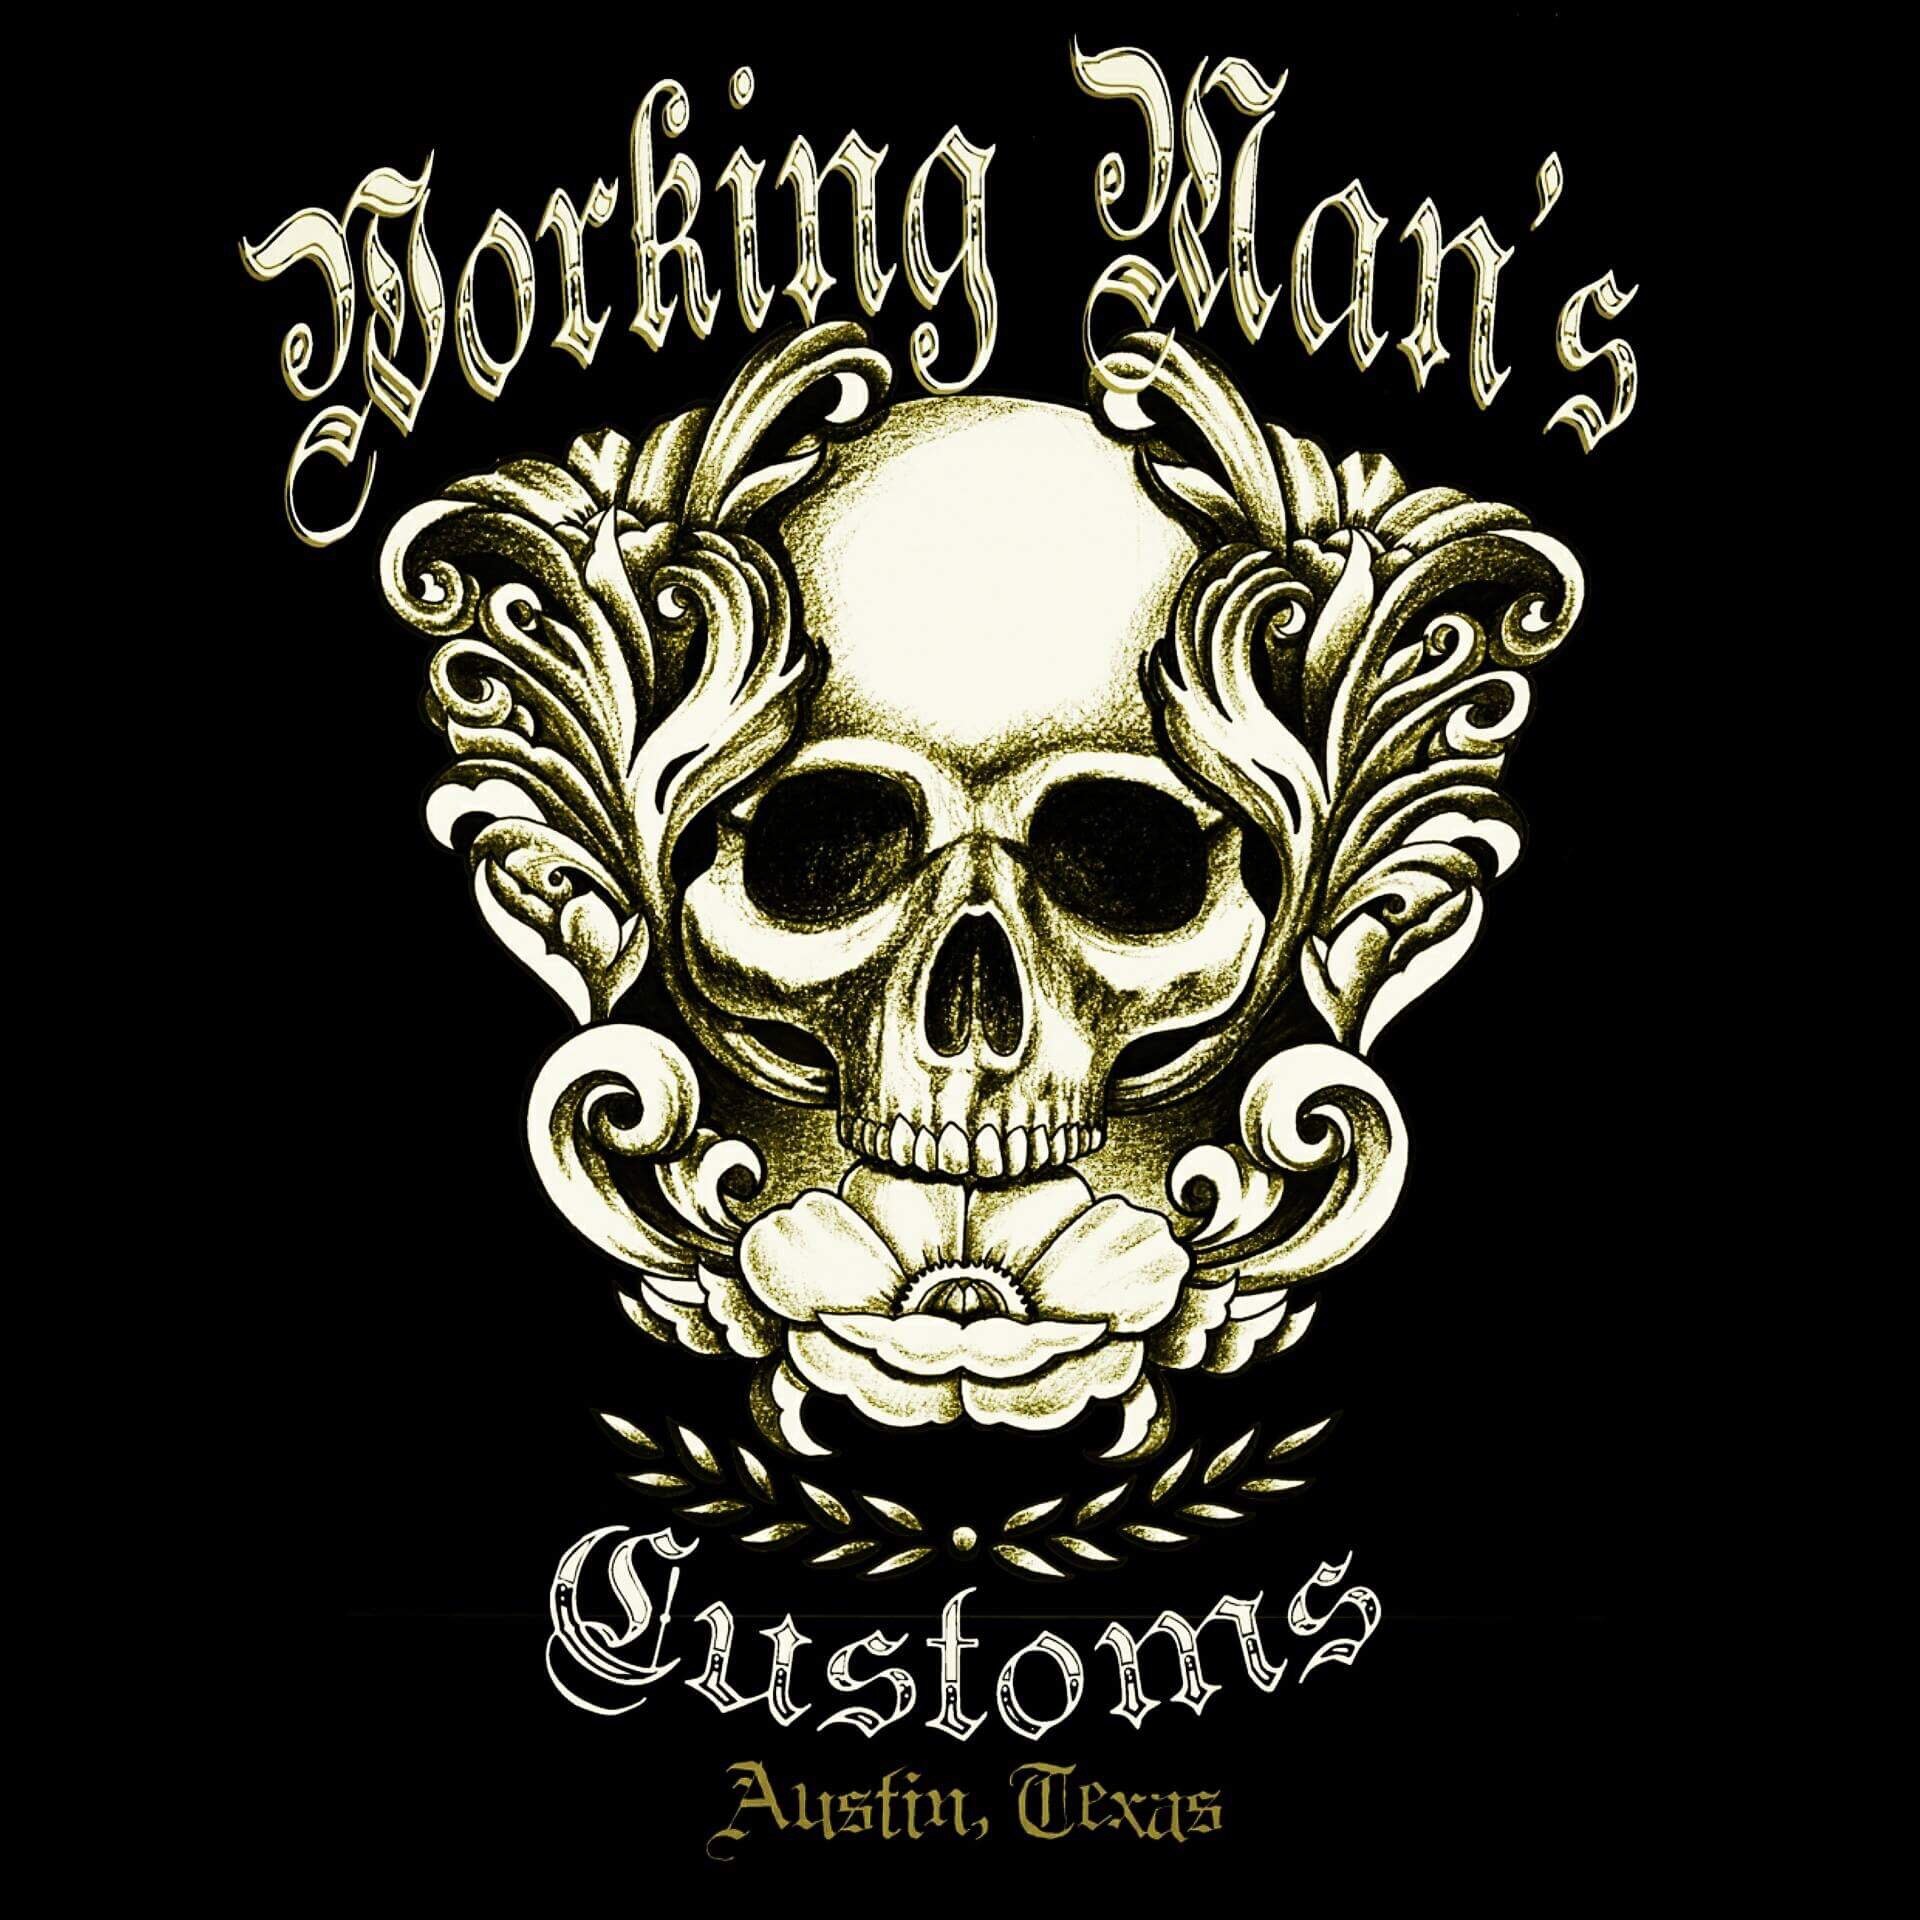 Working Man's Customs